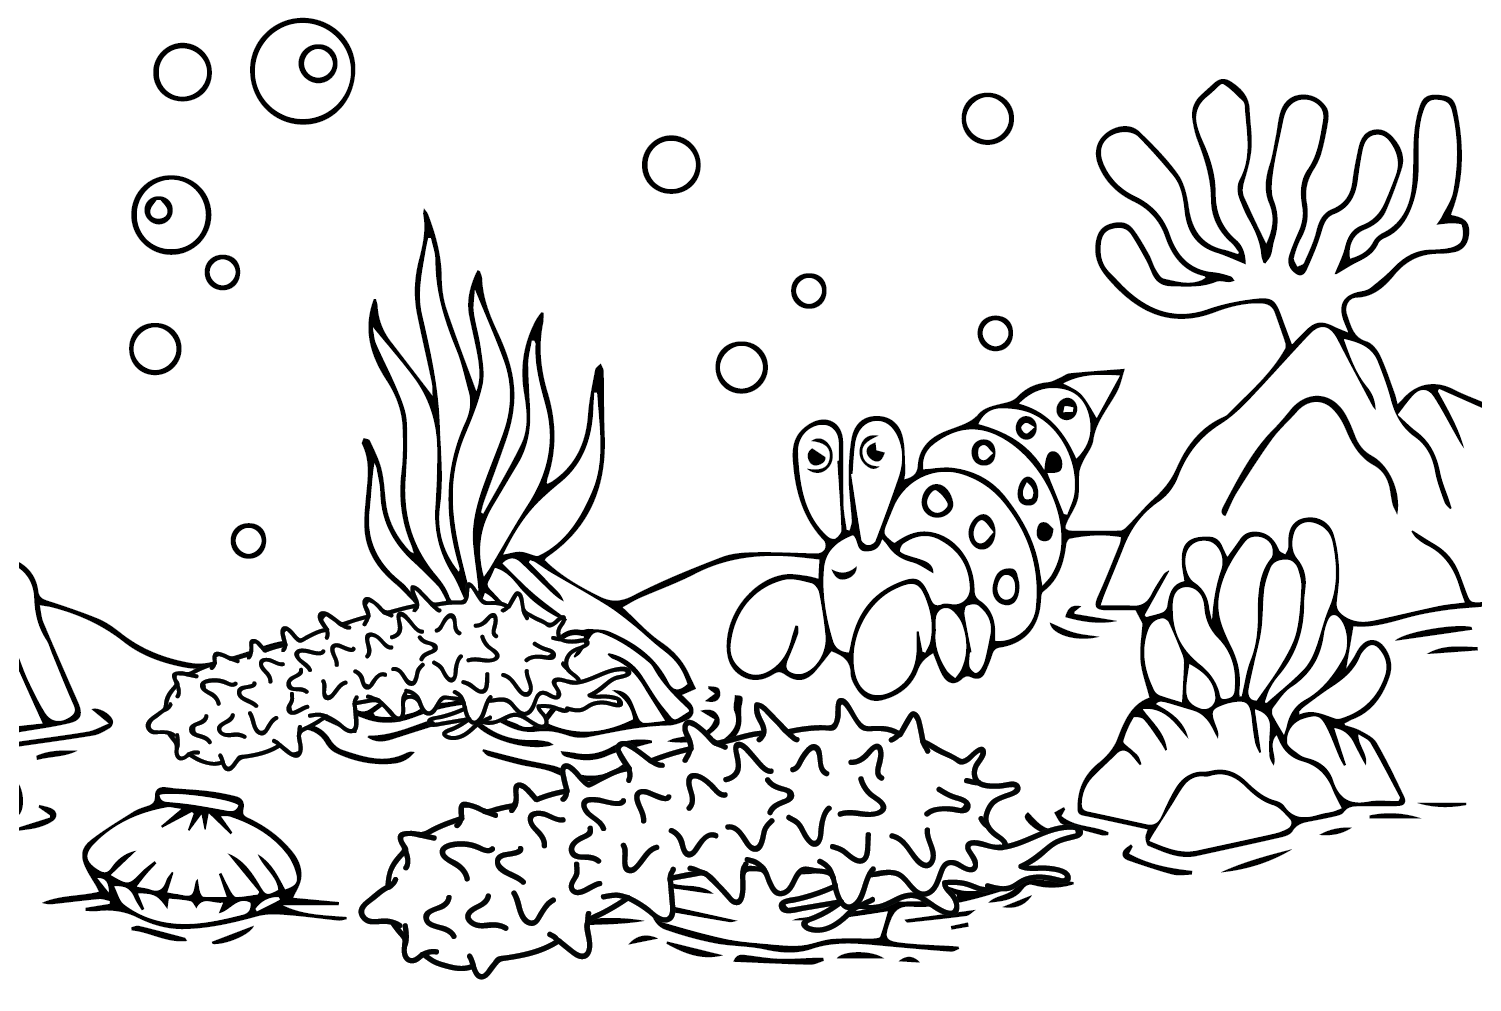 Pepino de mar en agua de pepino de mar